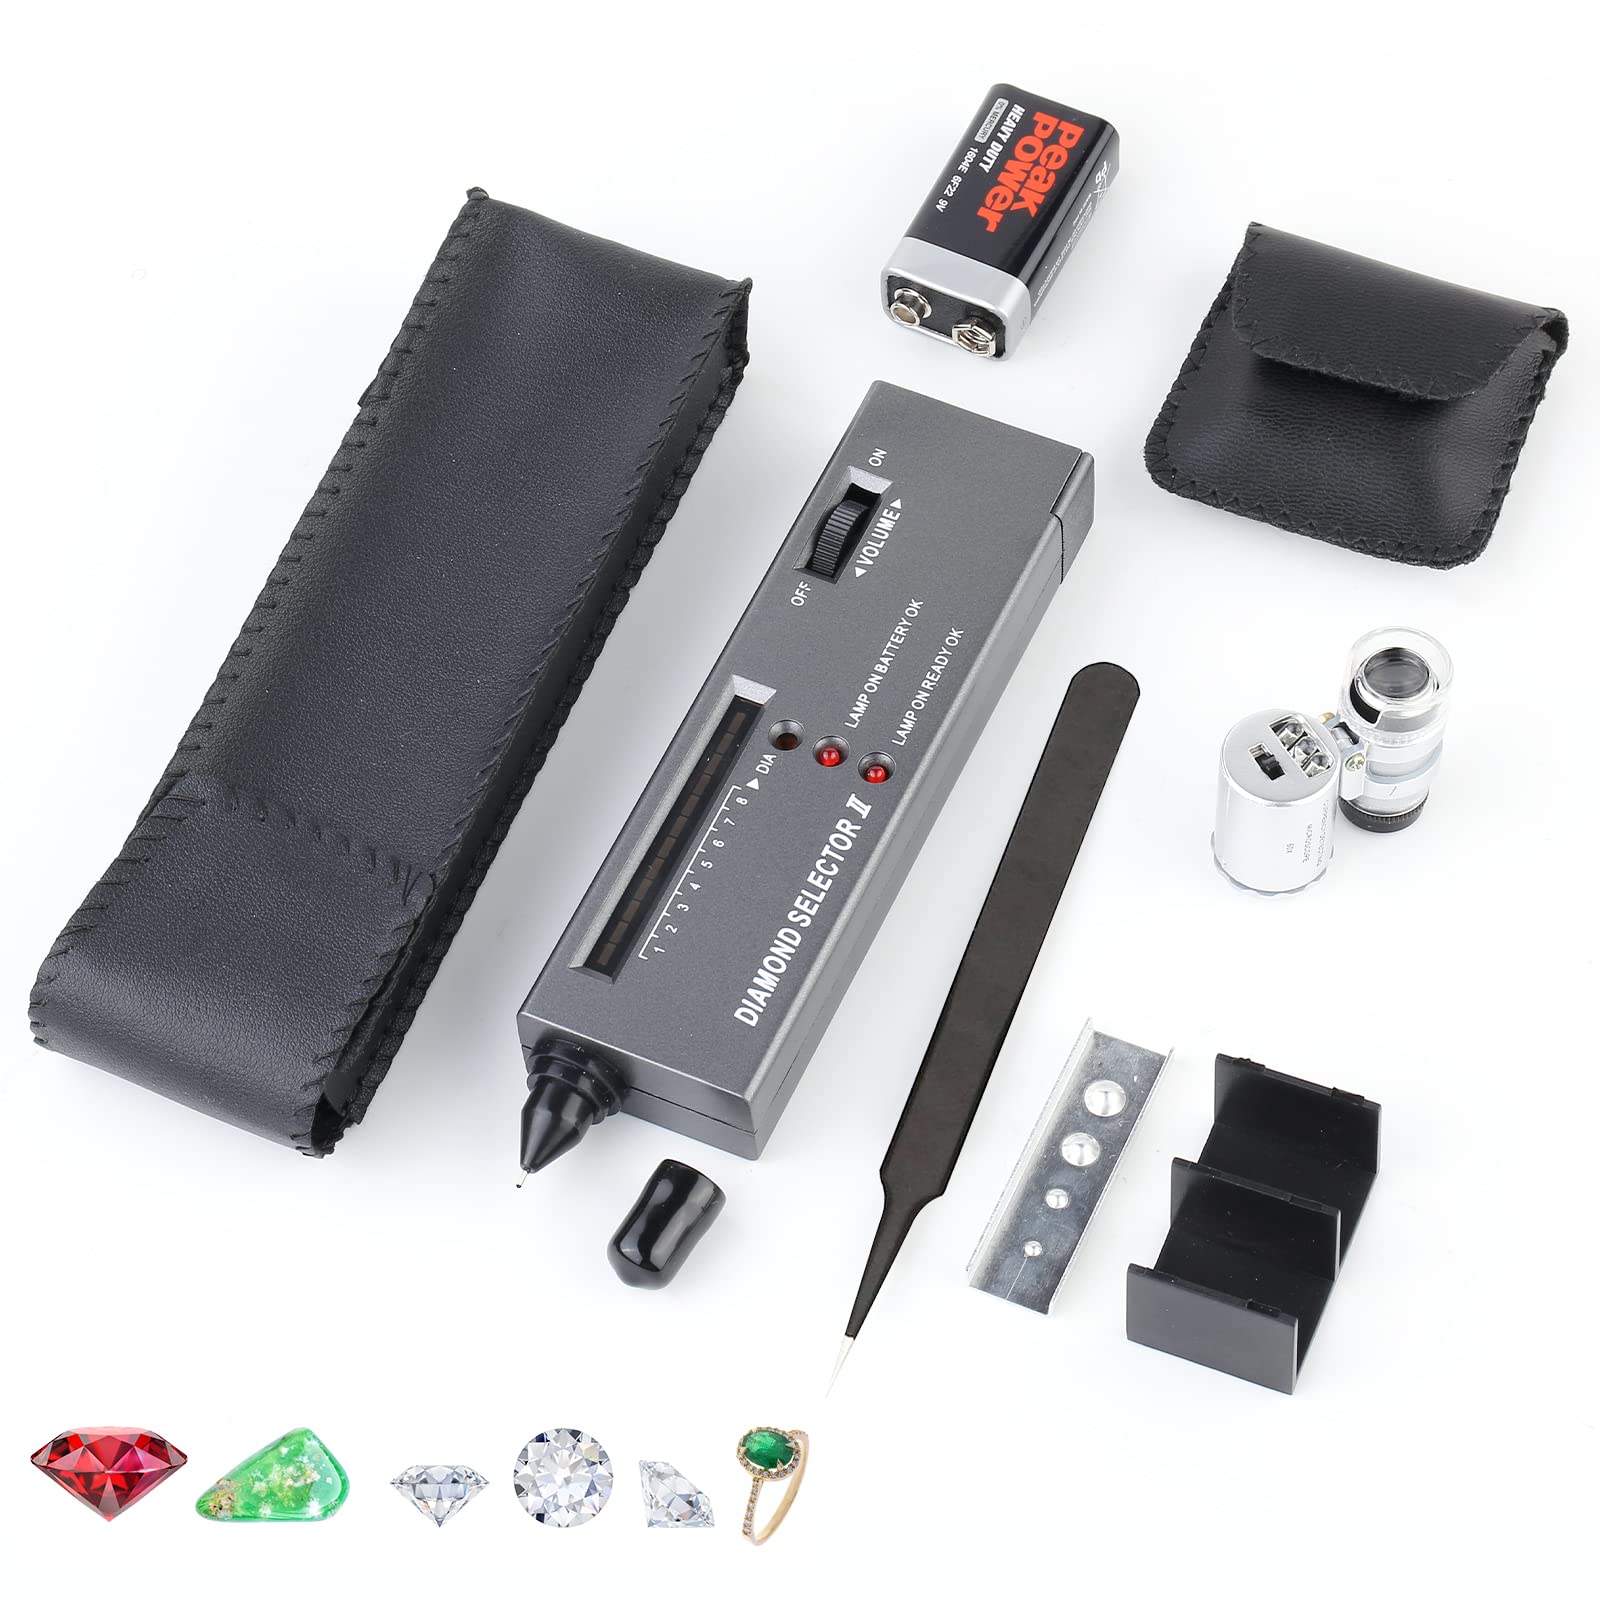 Diamond Tester Pen, High Accuracy Jewelry Diamond Tester+60X Mini LED Magnifying+ 20 Backup Batteries+1 Backup9V BatteryProfessional Diamond